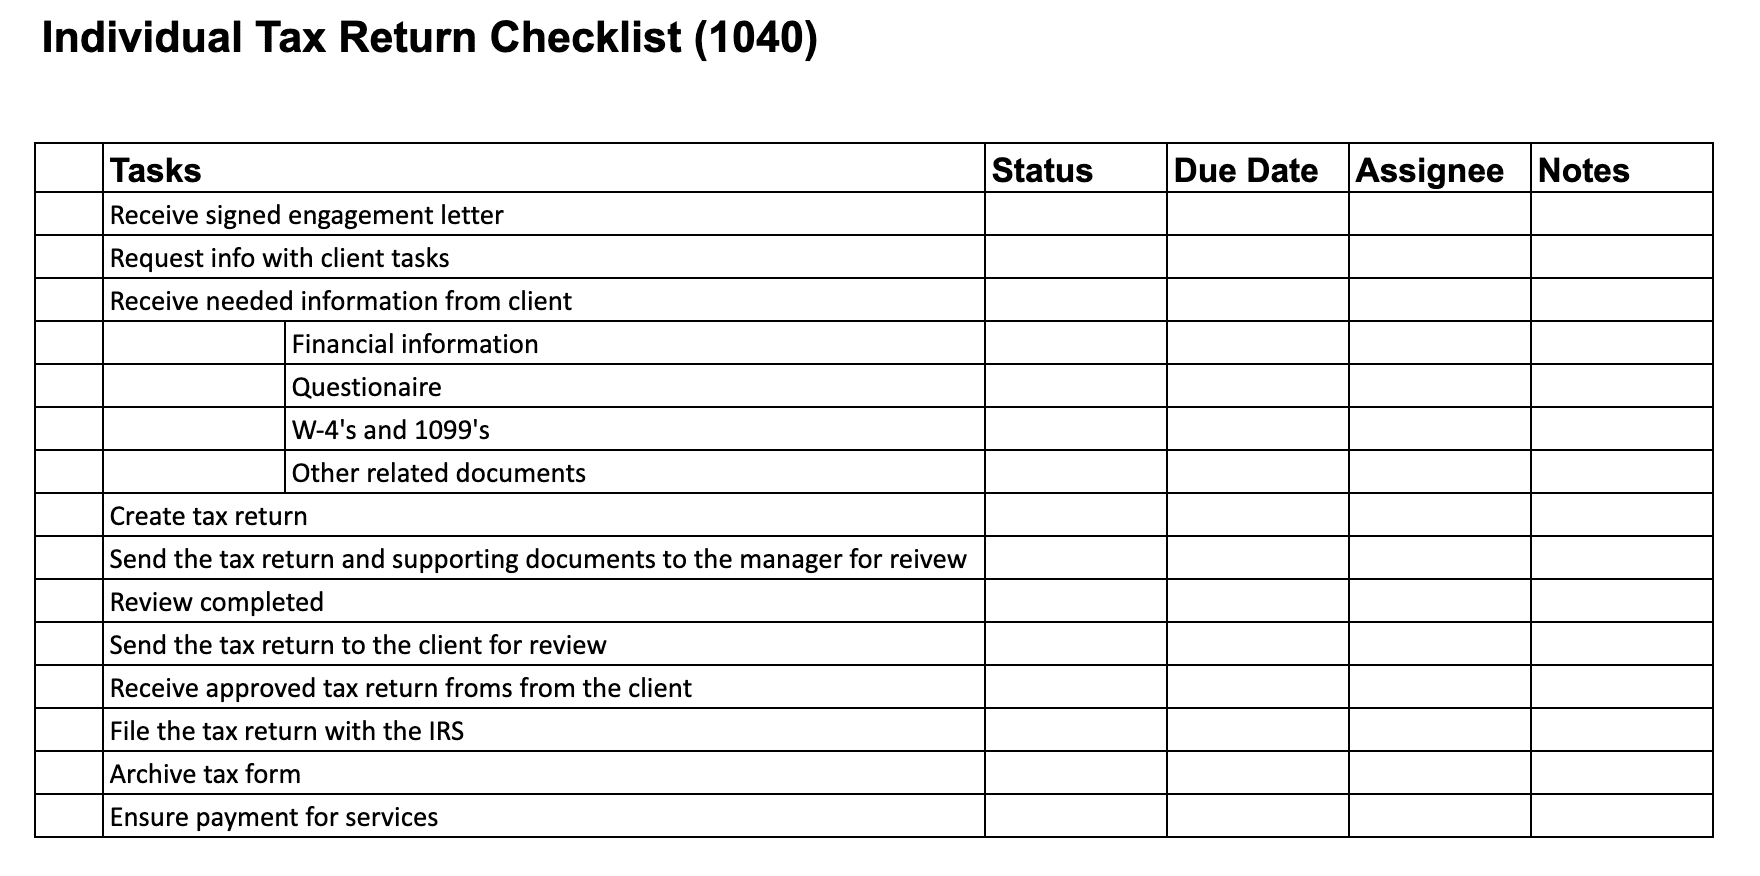 1040 Tax Return Checklist Template